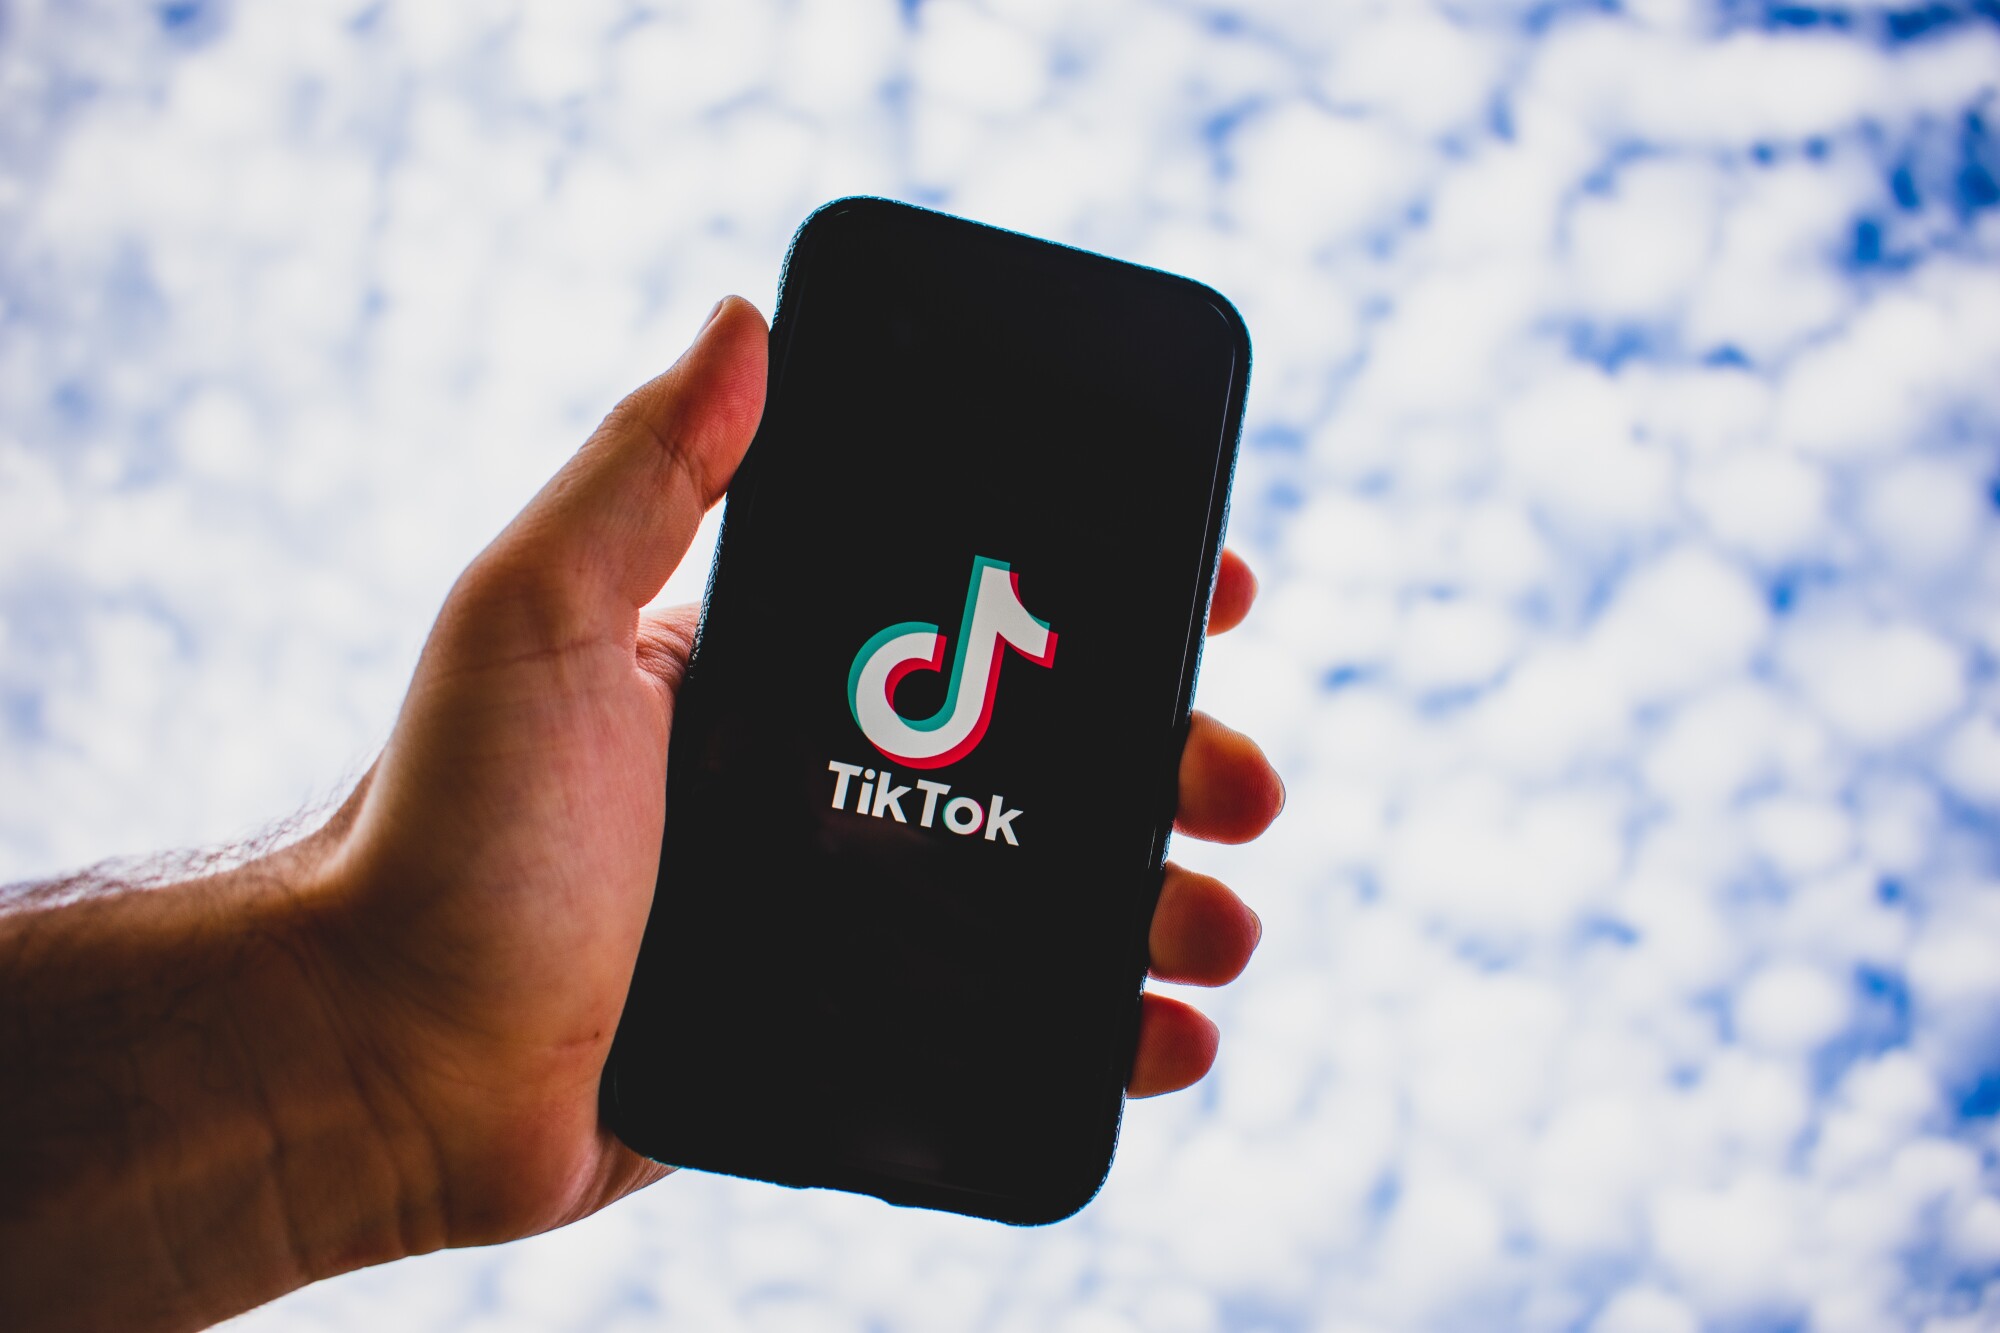 TikTok Marketing Tips